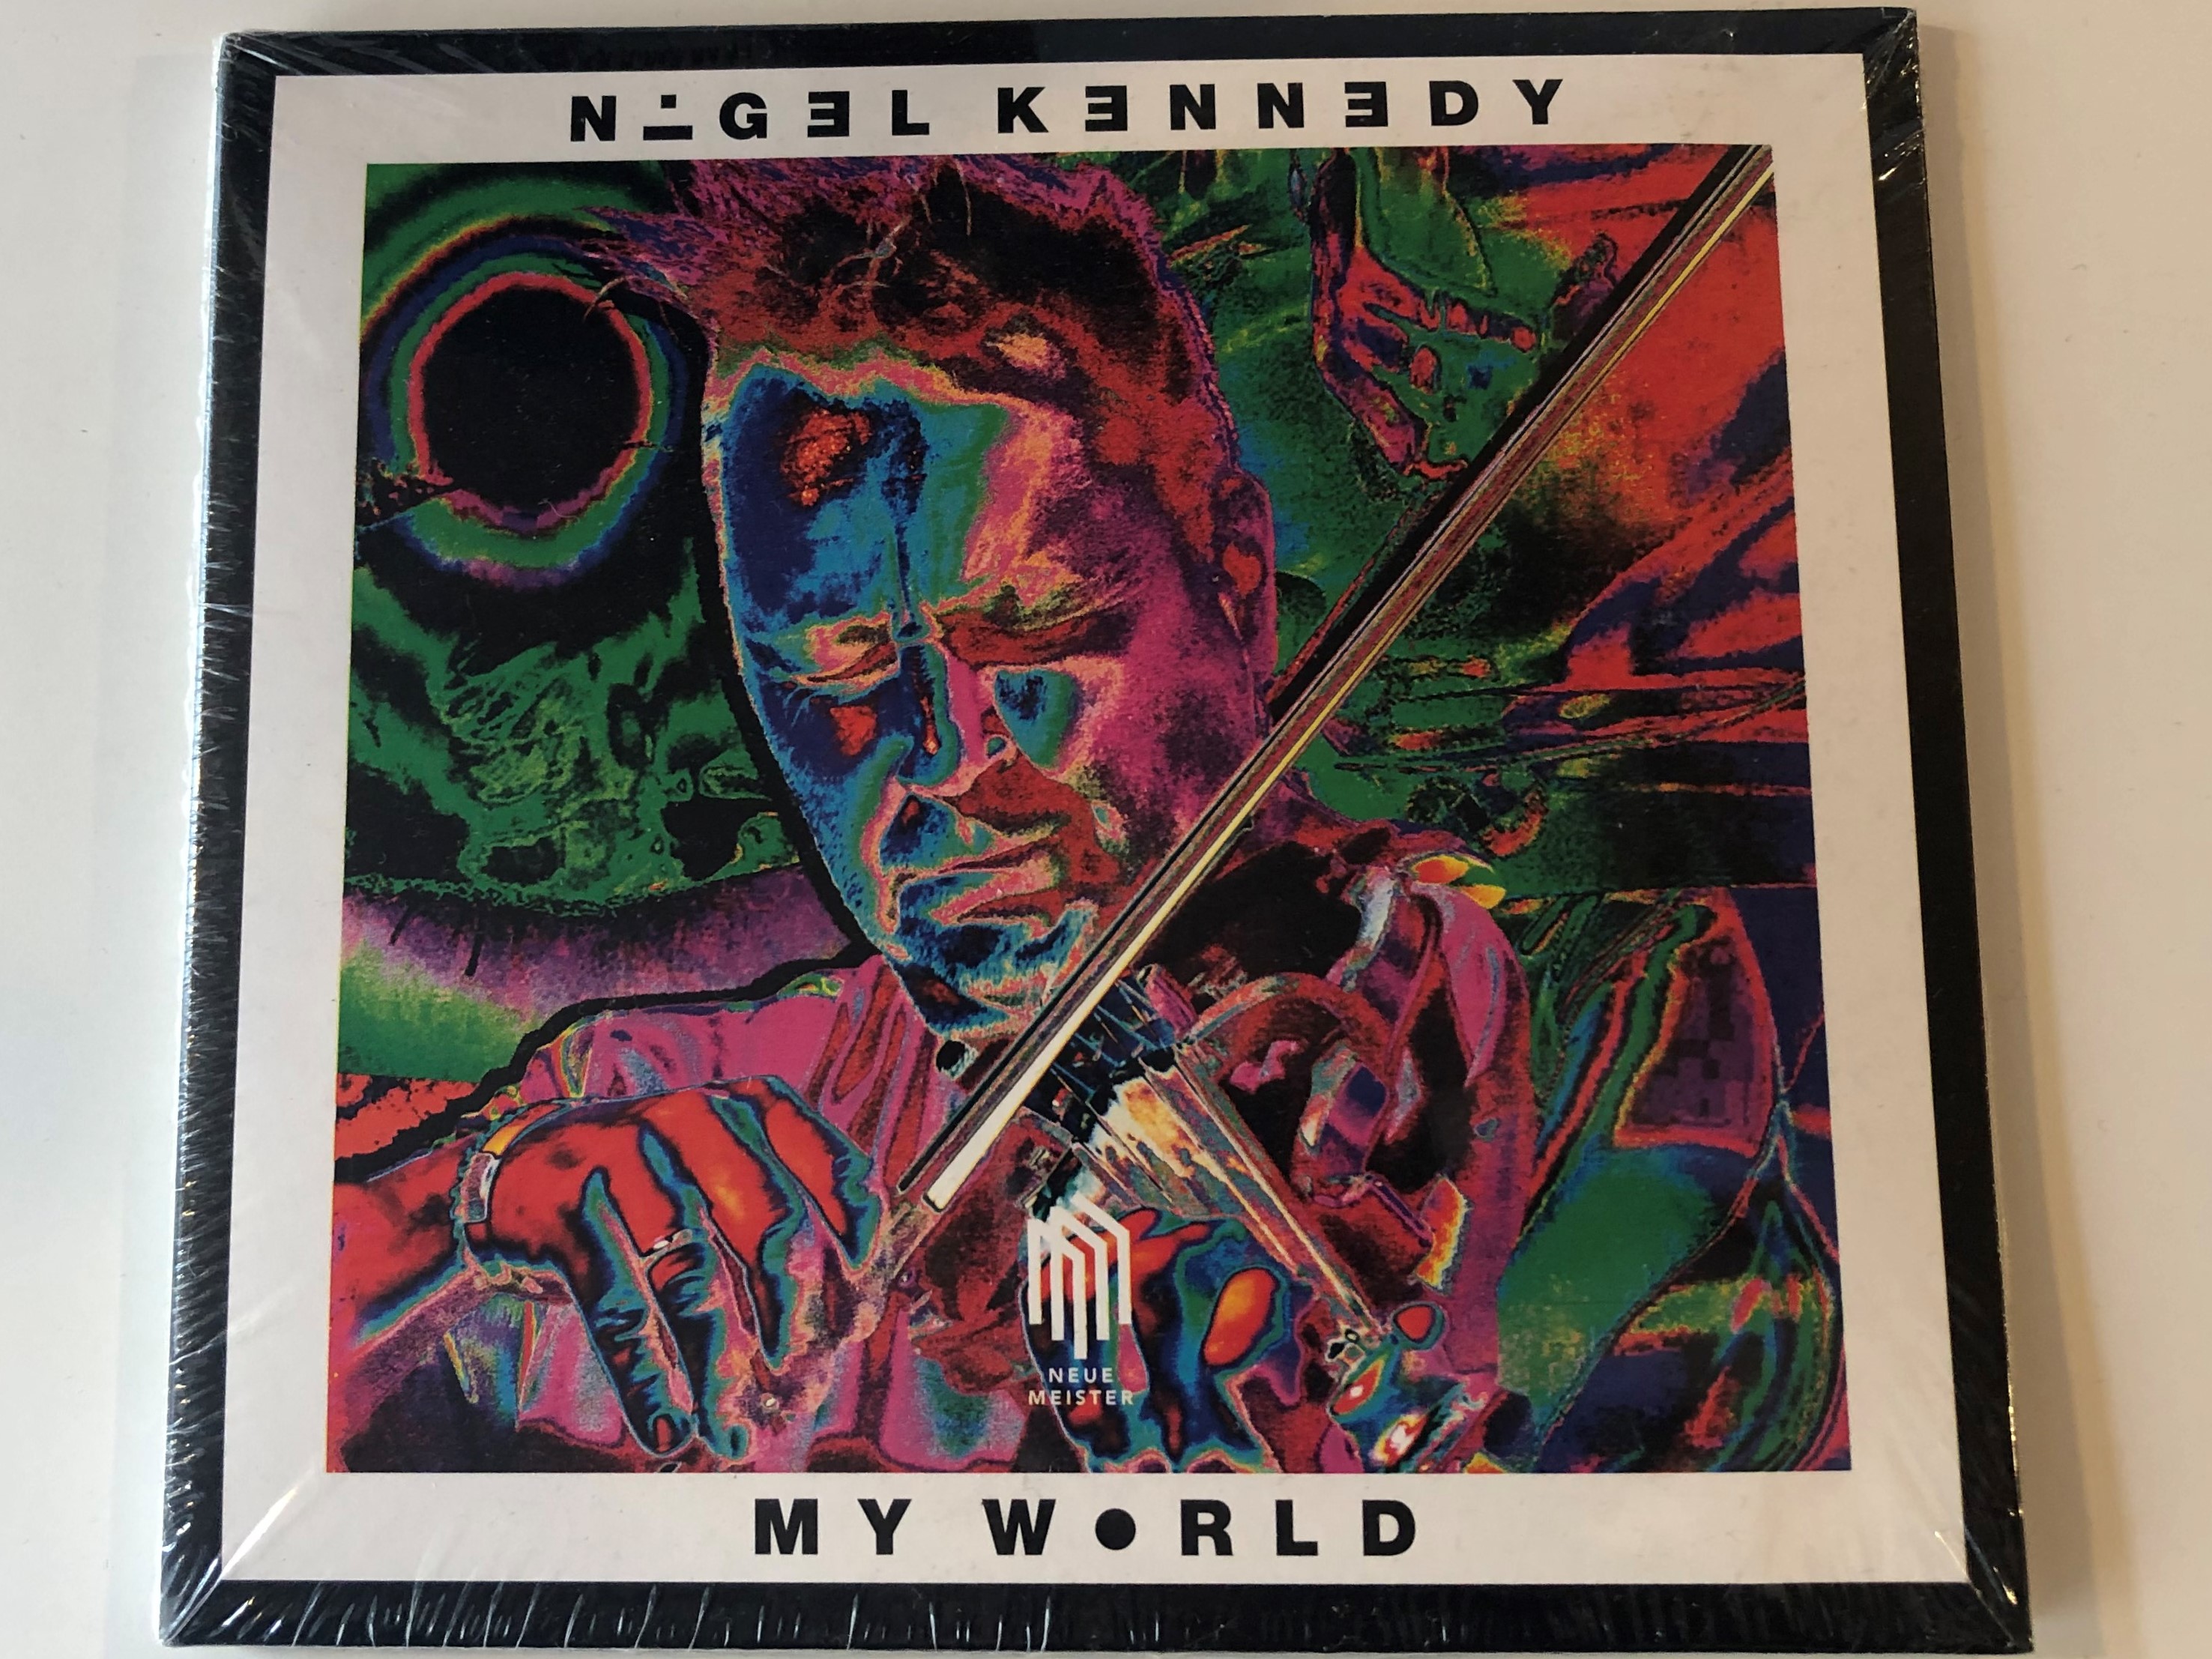 nigel-kennedy-my-world-edelkultur-audio-cd-2016-885470008783-1-.jpg